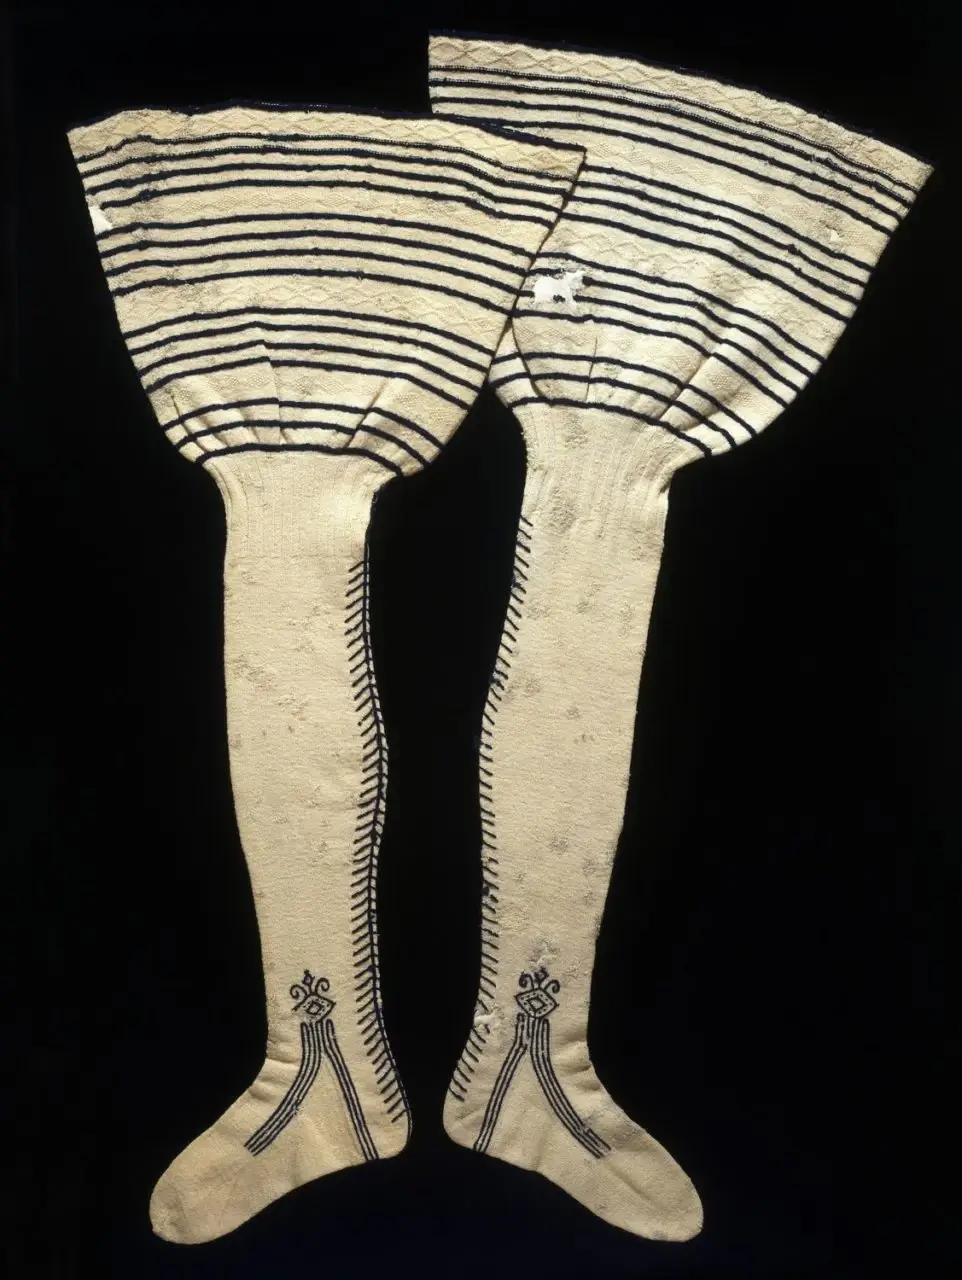 17th century socks